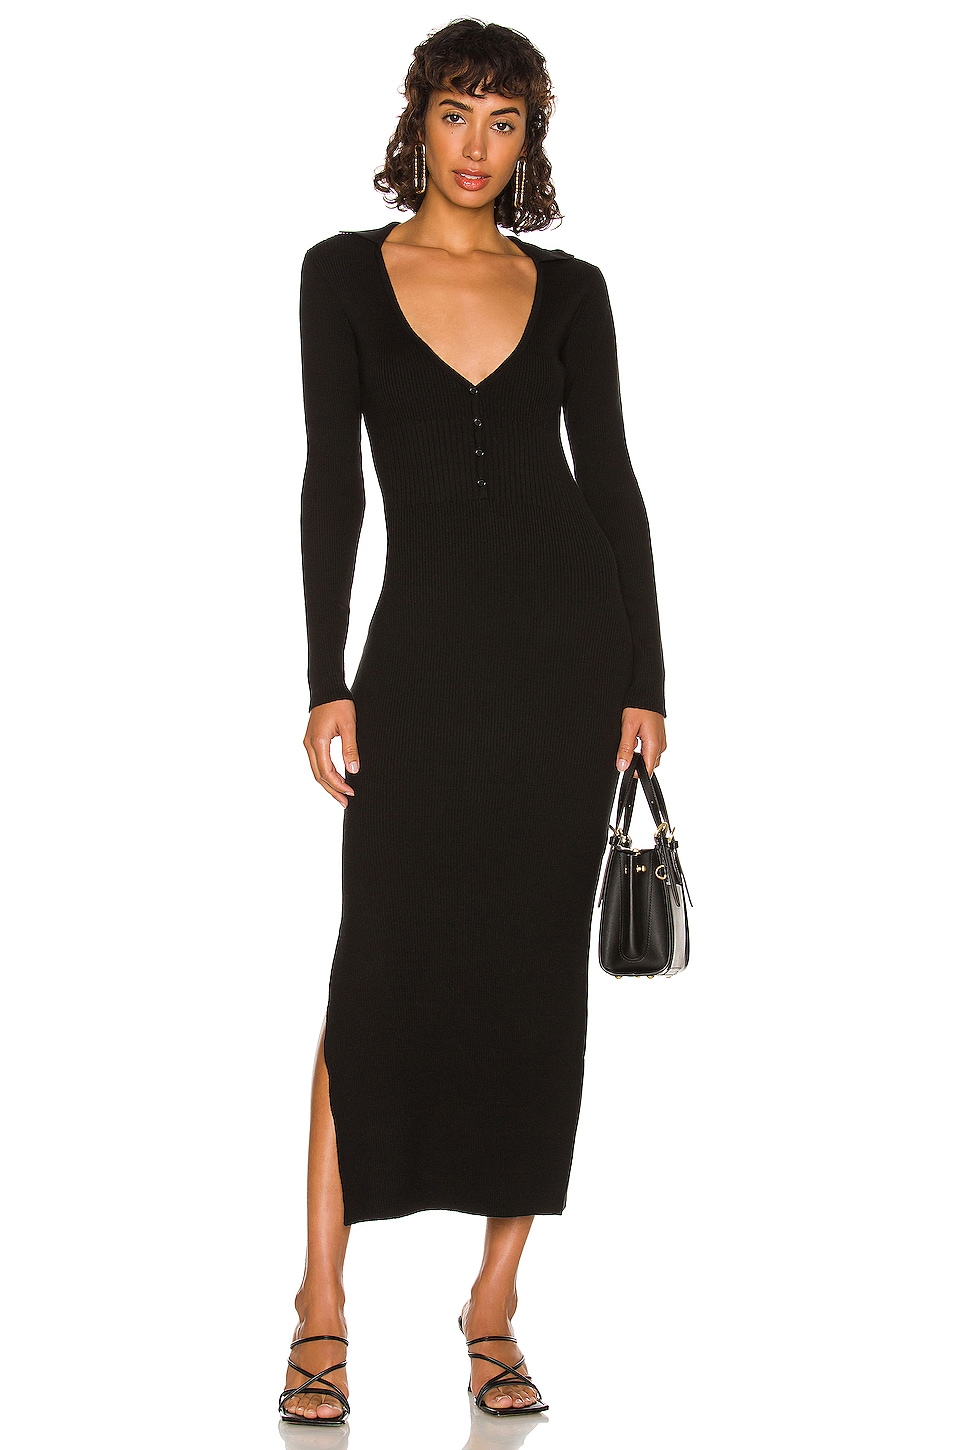 Bardot Collar Knit Dress in Black | REVOLVE